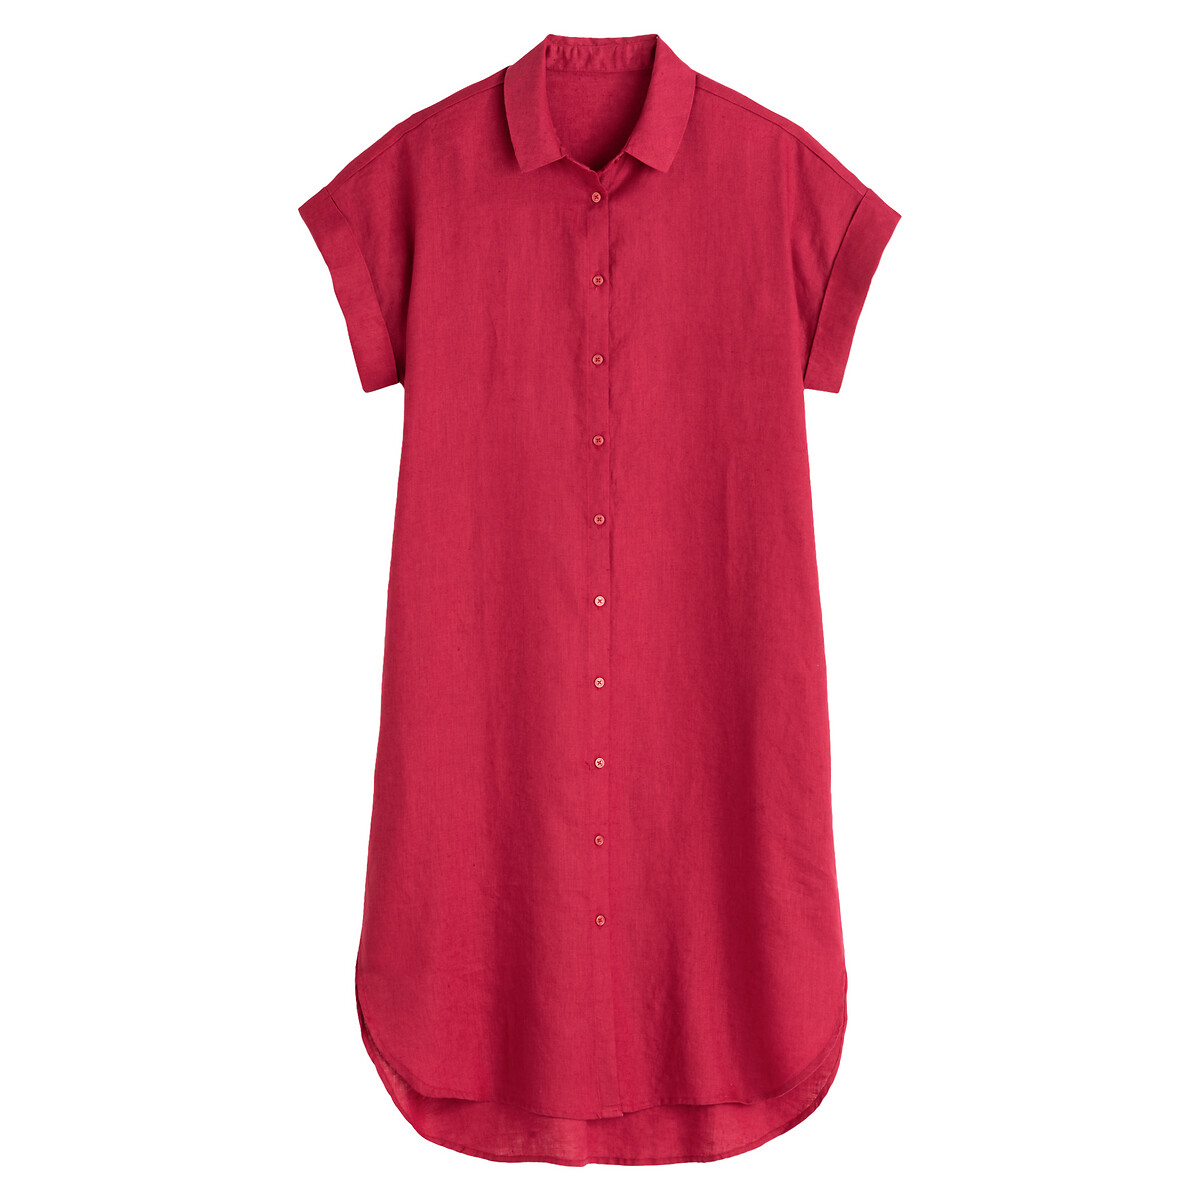 Платье-рубашка LaRedoute С короткими рукавами из льна 46 (FR) - 52 (RUS) розовый, размер 46 (FR) - 52 (RUS) С короткими рукавами из льна 46 (FR) - 52 (RUS) розовый - фото 5